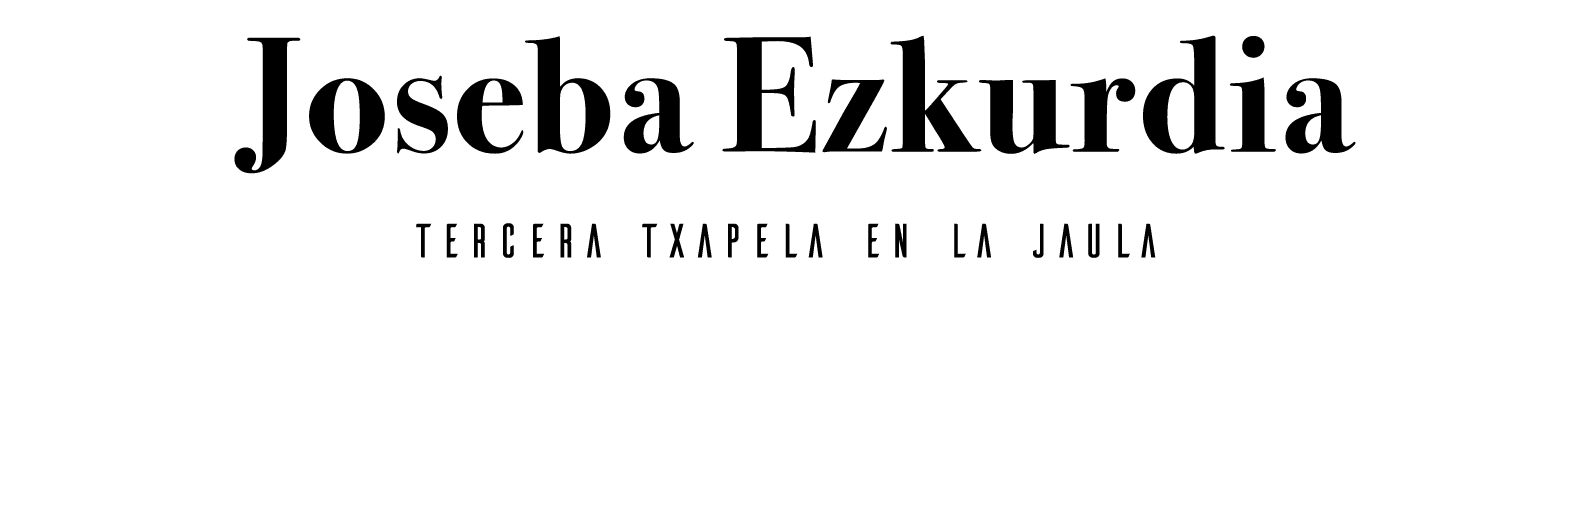 Joseba Ezkurdia Tercera txapela en la jaula